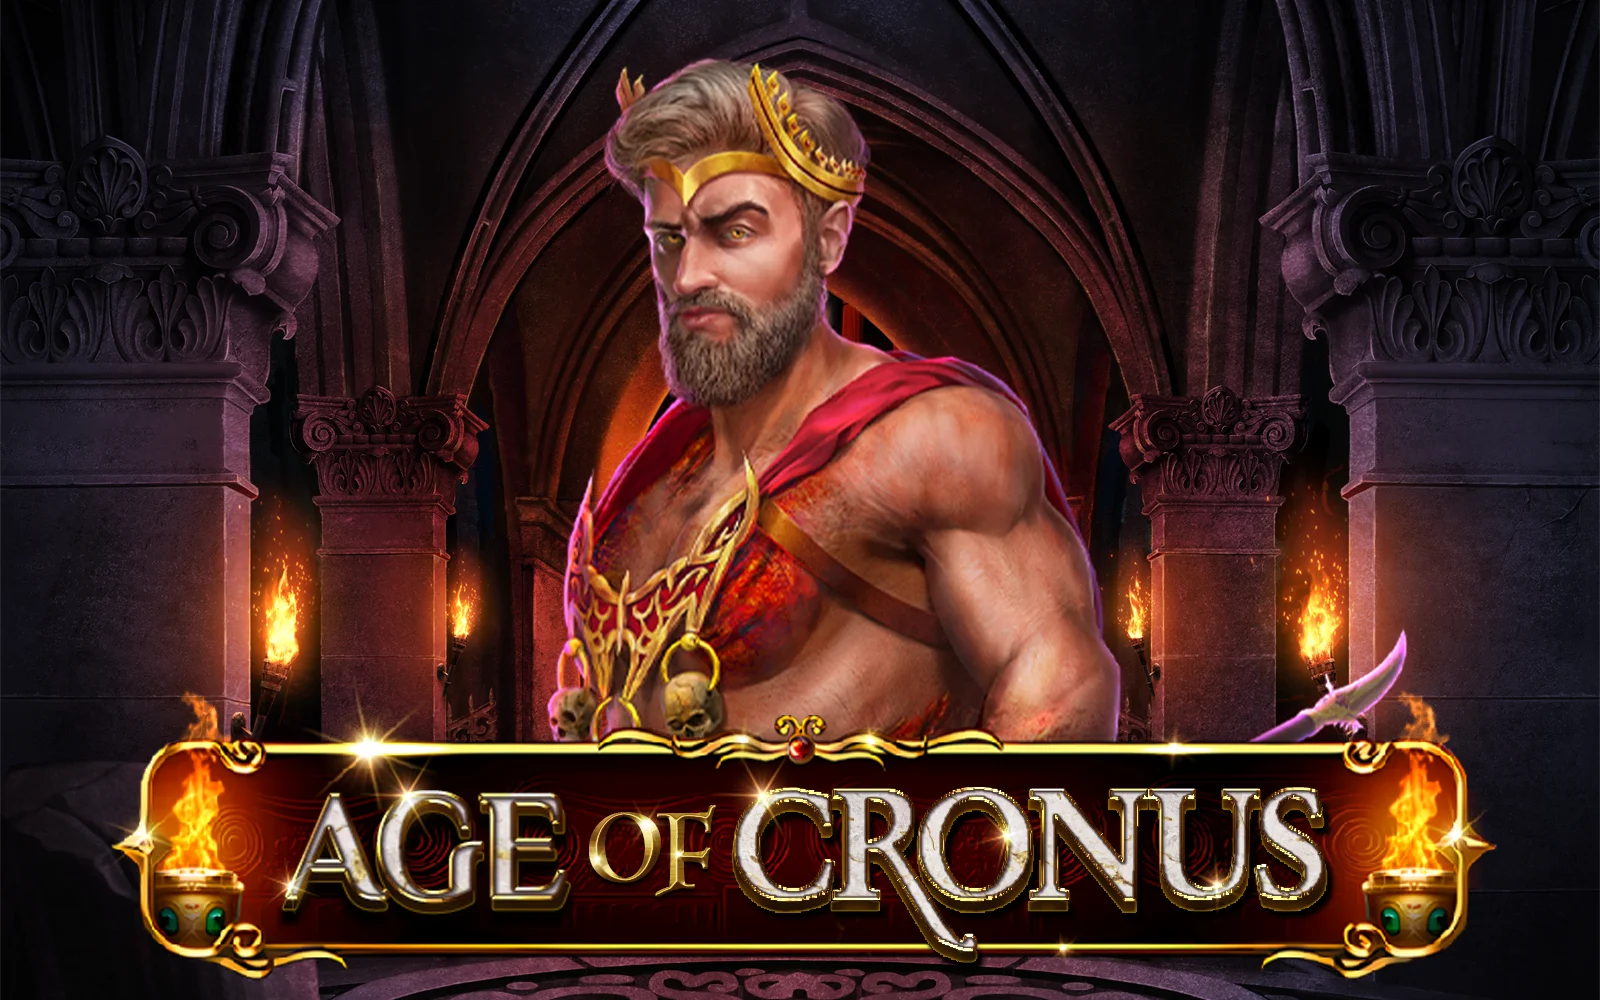 Play Age Of Cronus on Starcasino.be online casino